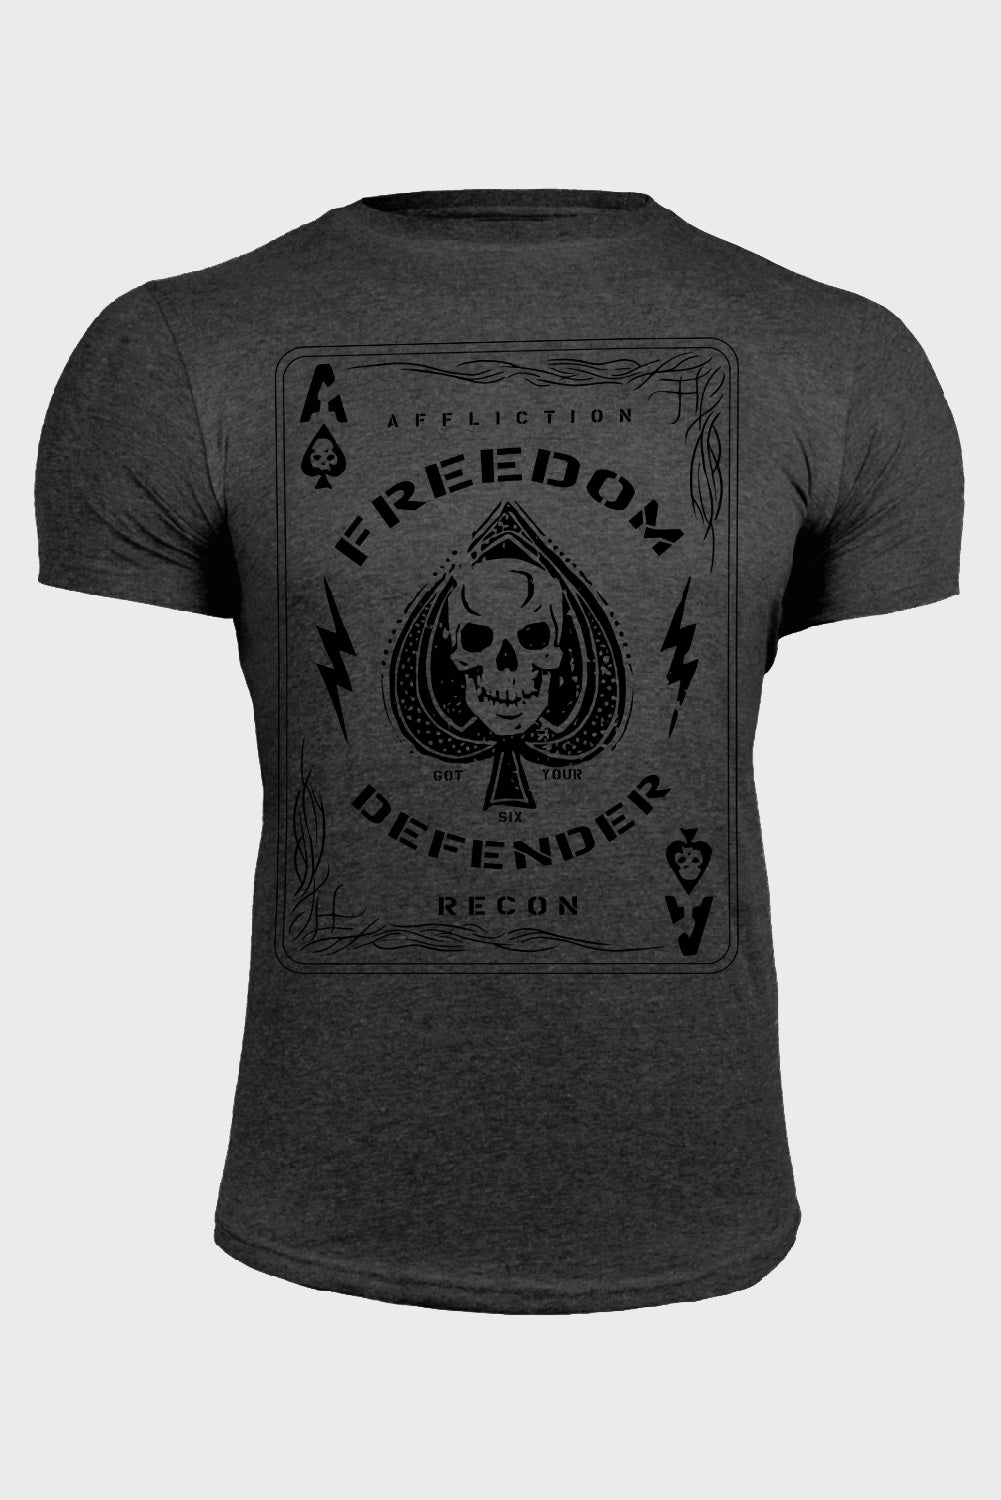 Gray FREEDOM Playing Card Skull Graphic Print Men's T Shirt Gray 62%Polyester+32%Cotton+6%Elastane Men's Tops JT's Designer Fashion